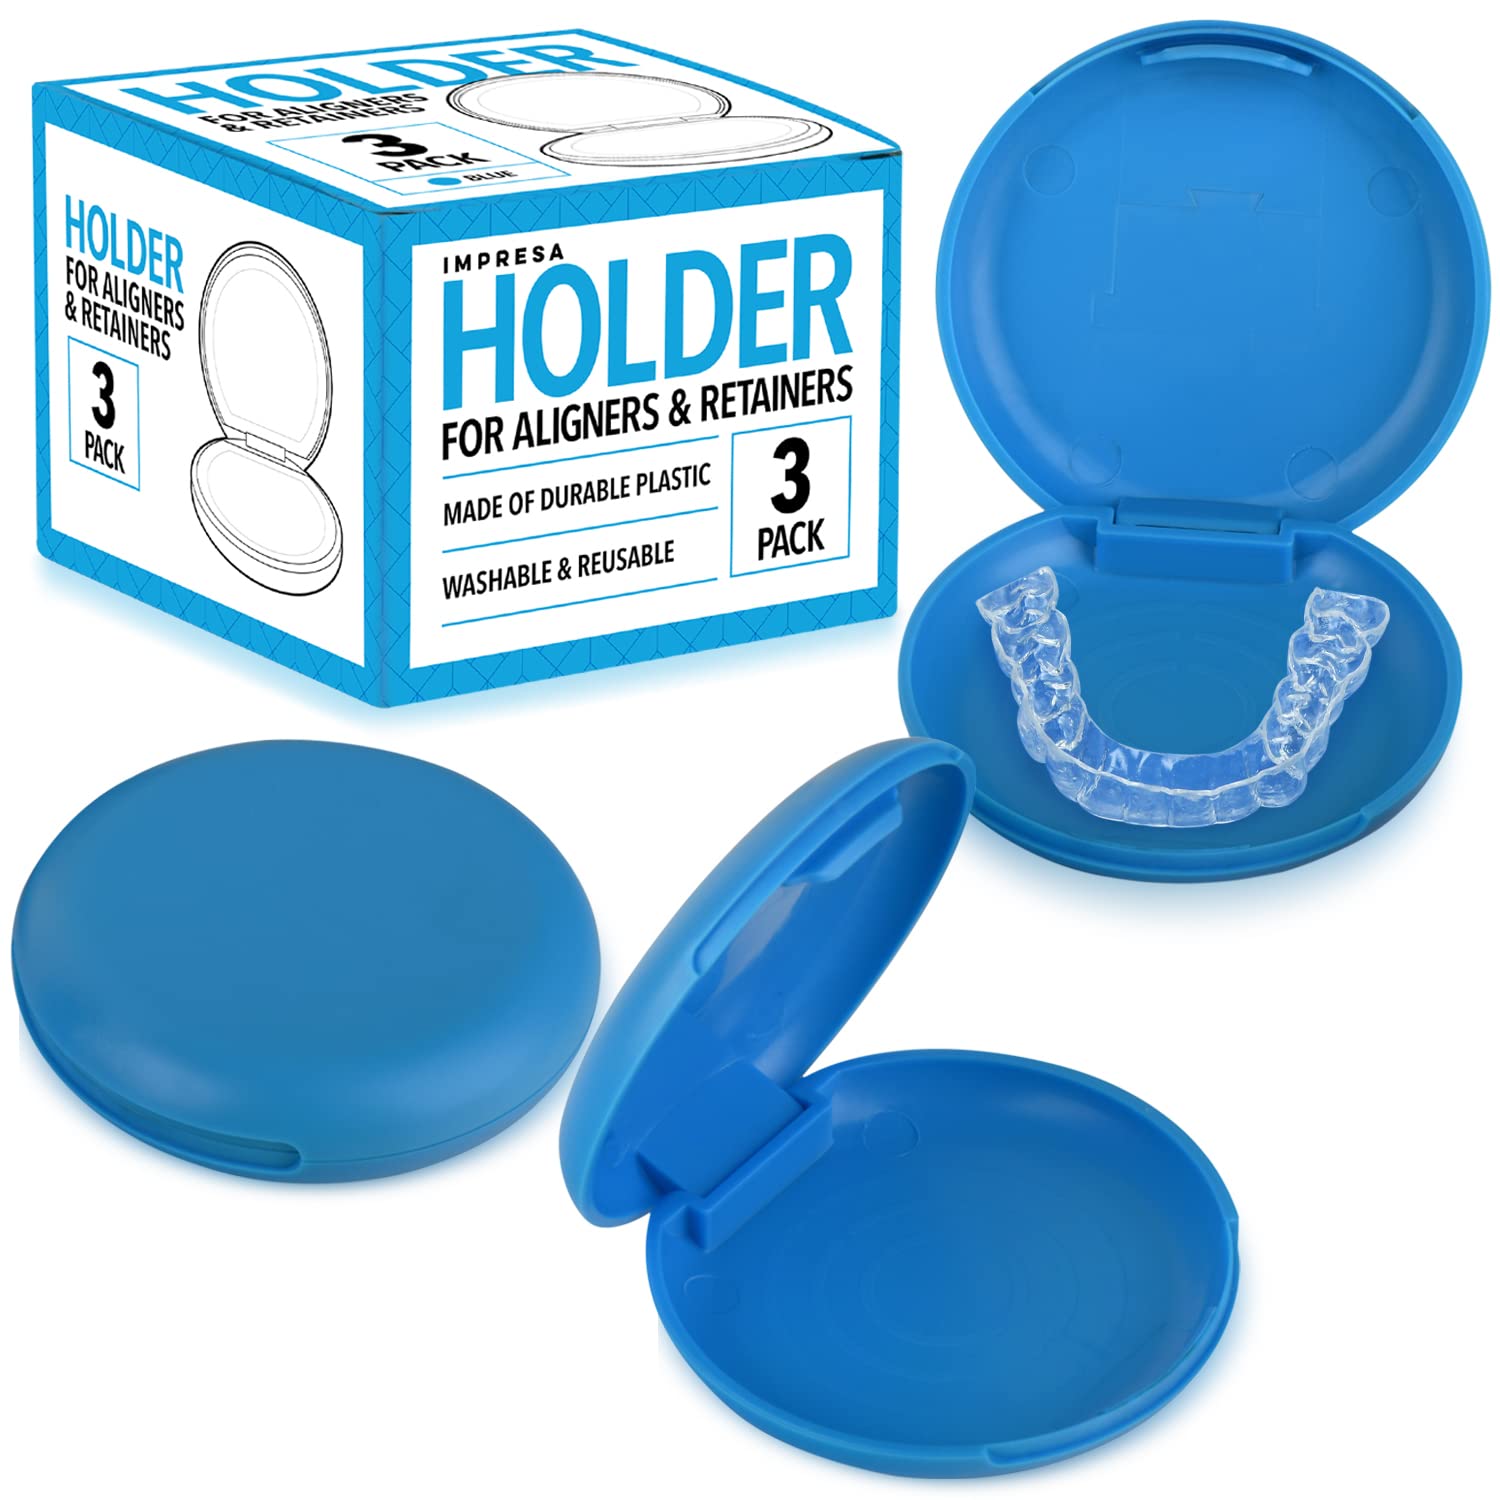 3 Pack Impresa Retainer Case Set Intended for Invisalign Teeth Aligner -  Slim Pocket-Sized Aligner Case to Take Anywhere - Retainer Cases for Secure  Close & Easy Open - Retainer Holder